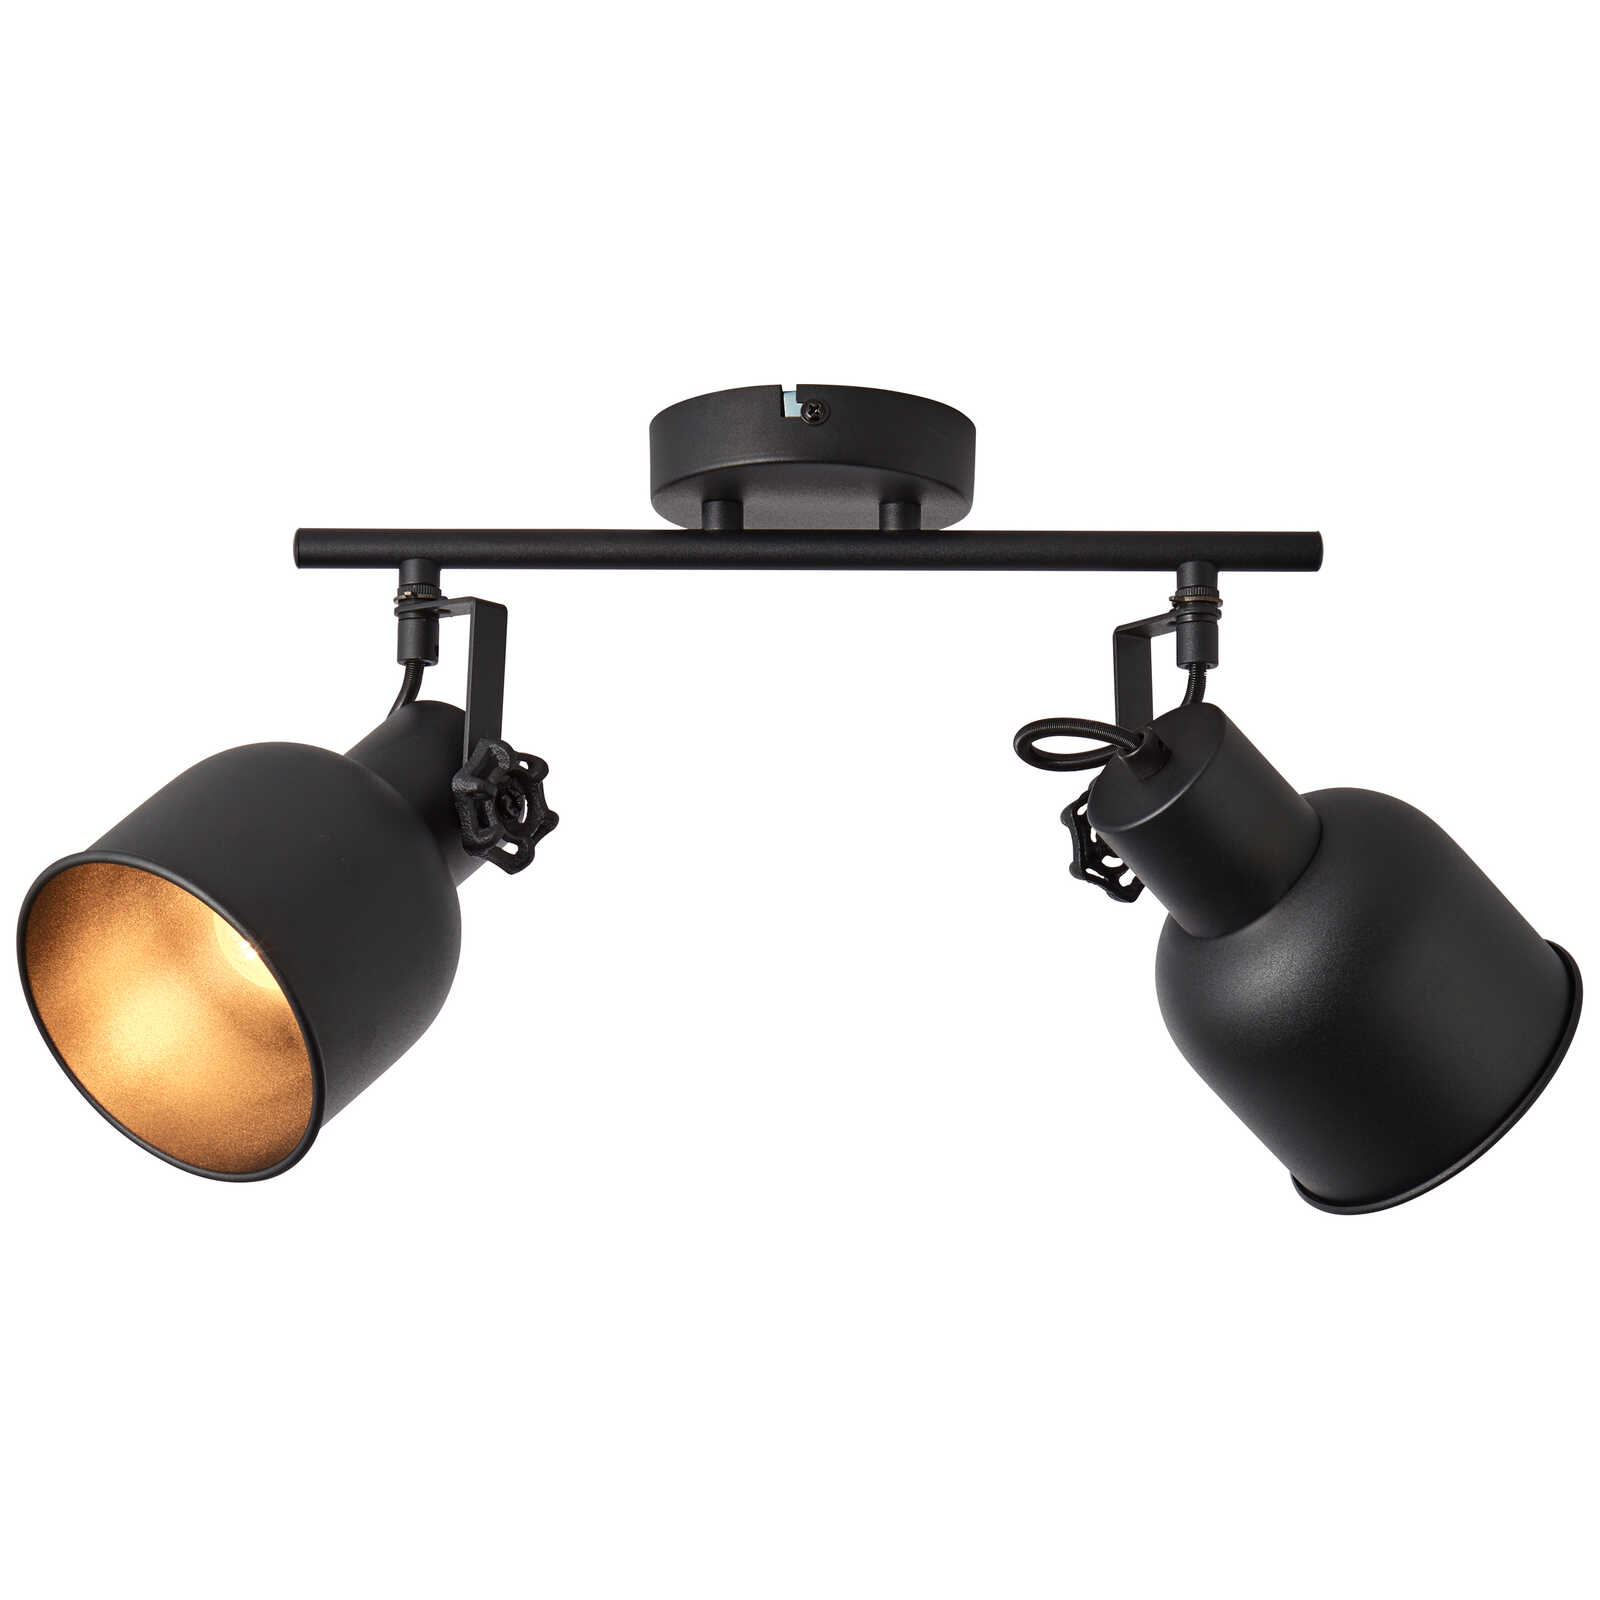             Metalen plafondlamp - Mia 3 - Zwart
        